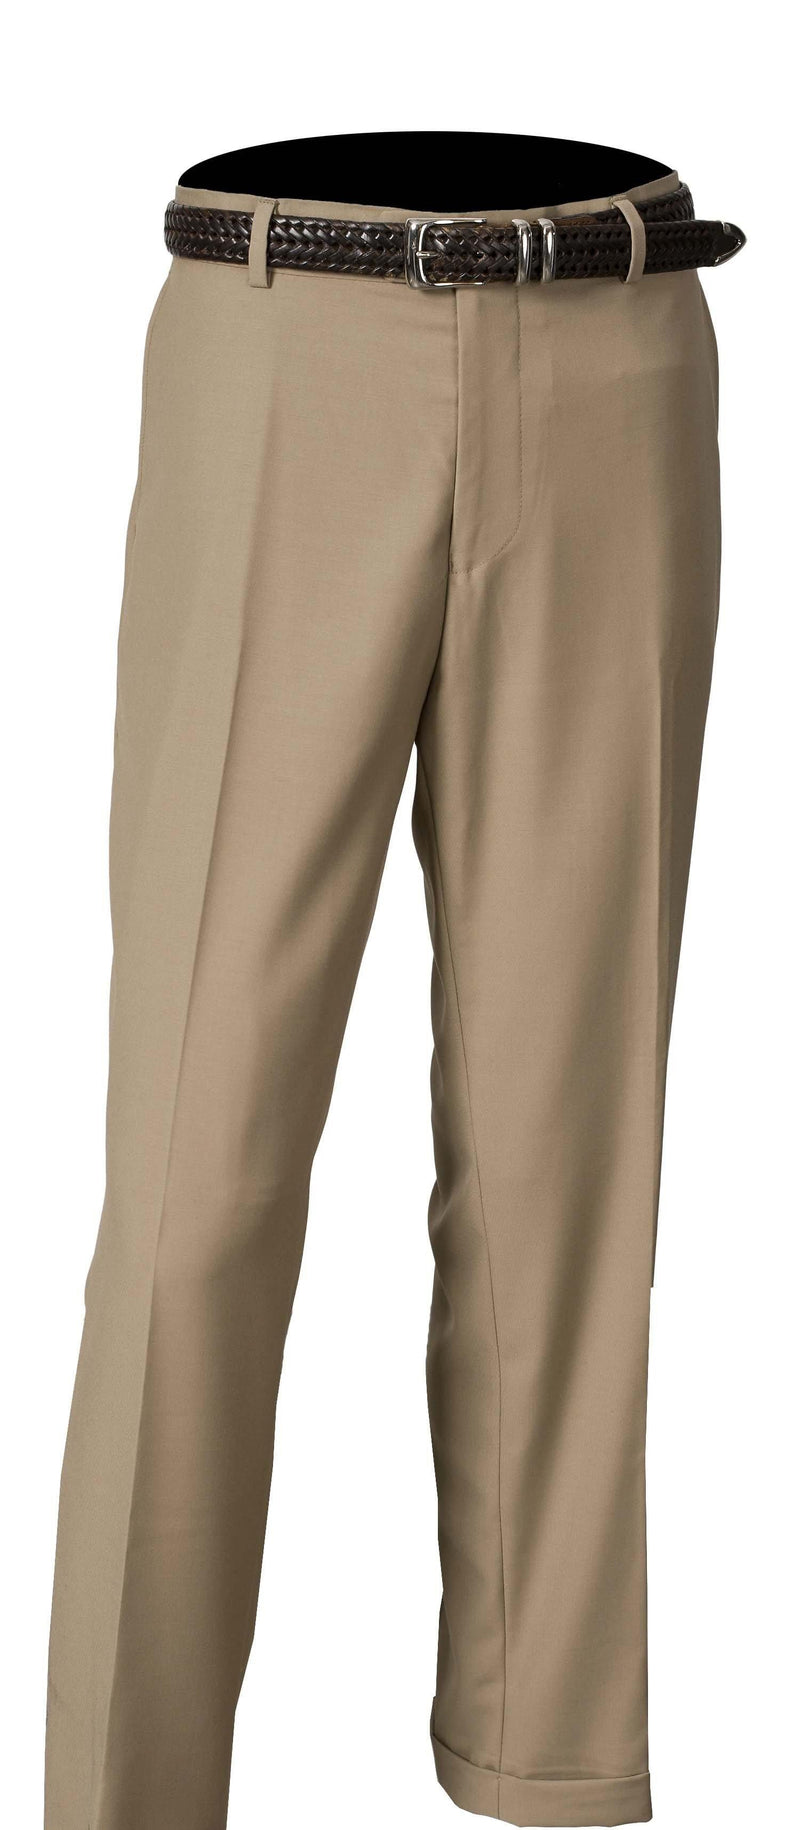 Khaki Ultra Slim Fit Pants - Upscale Men's Fashion